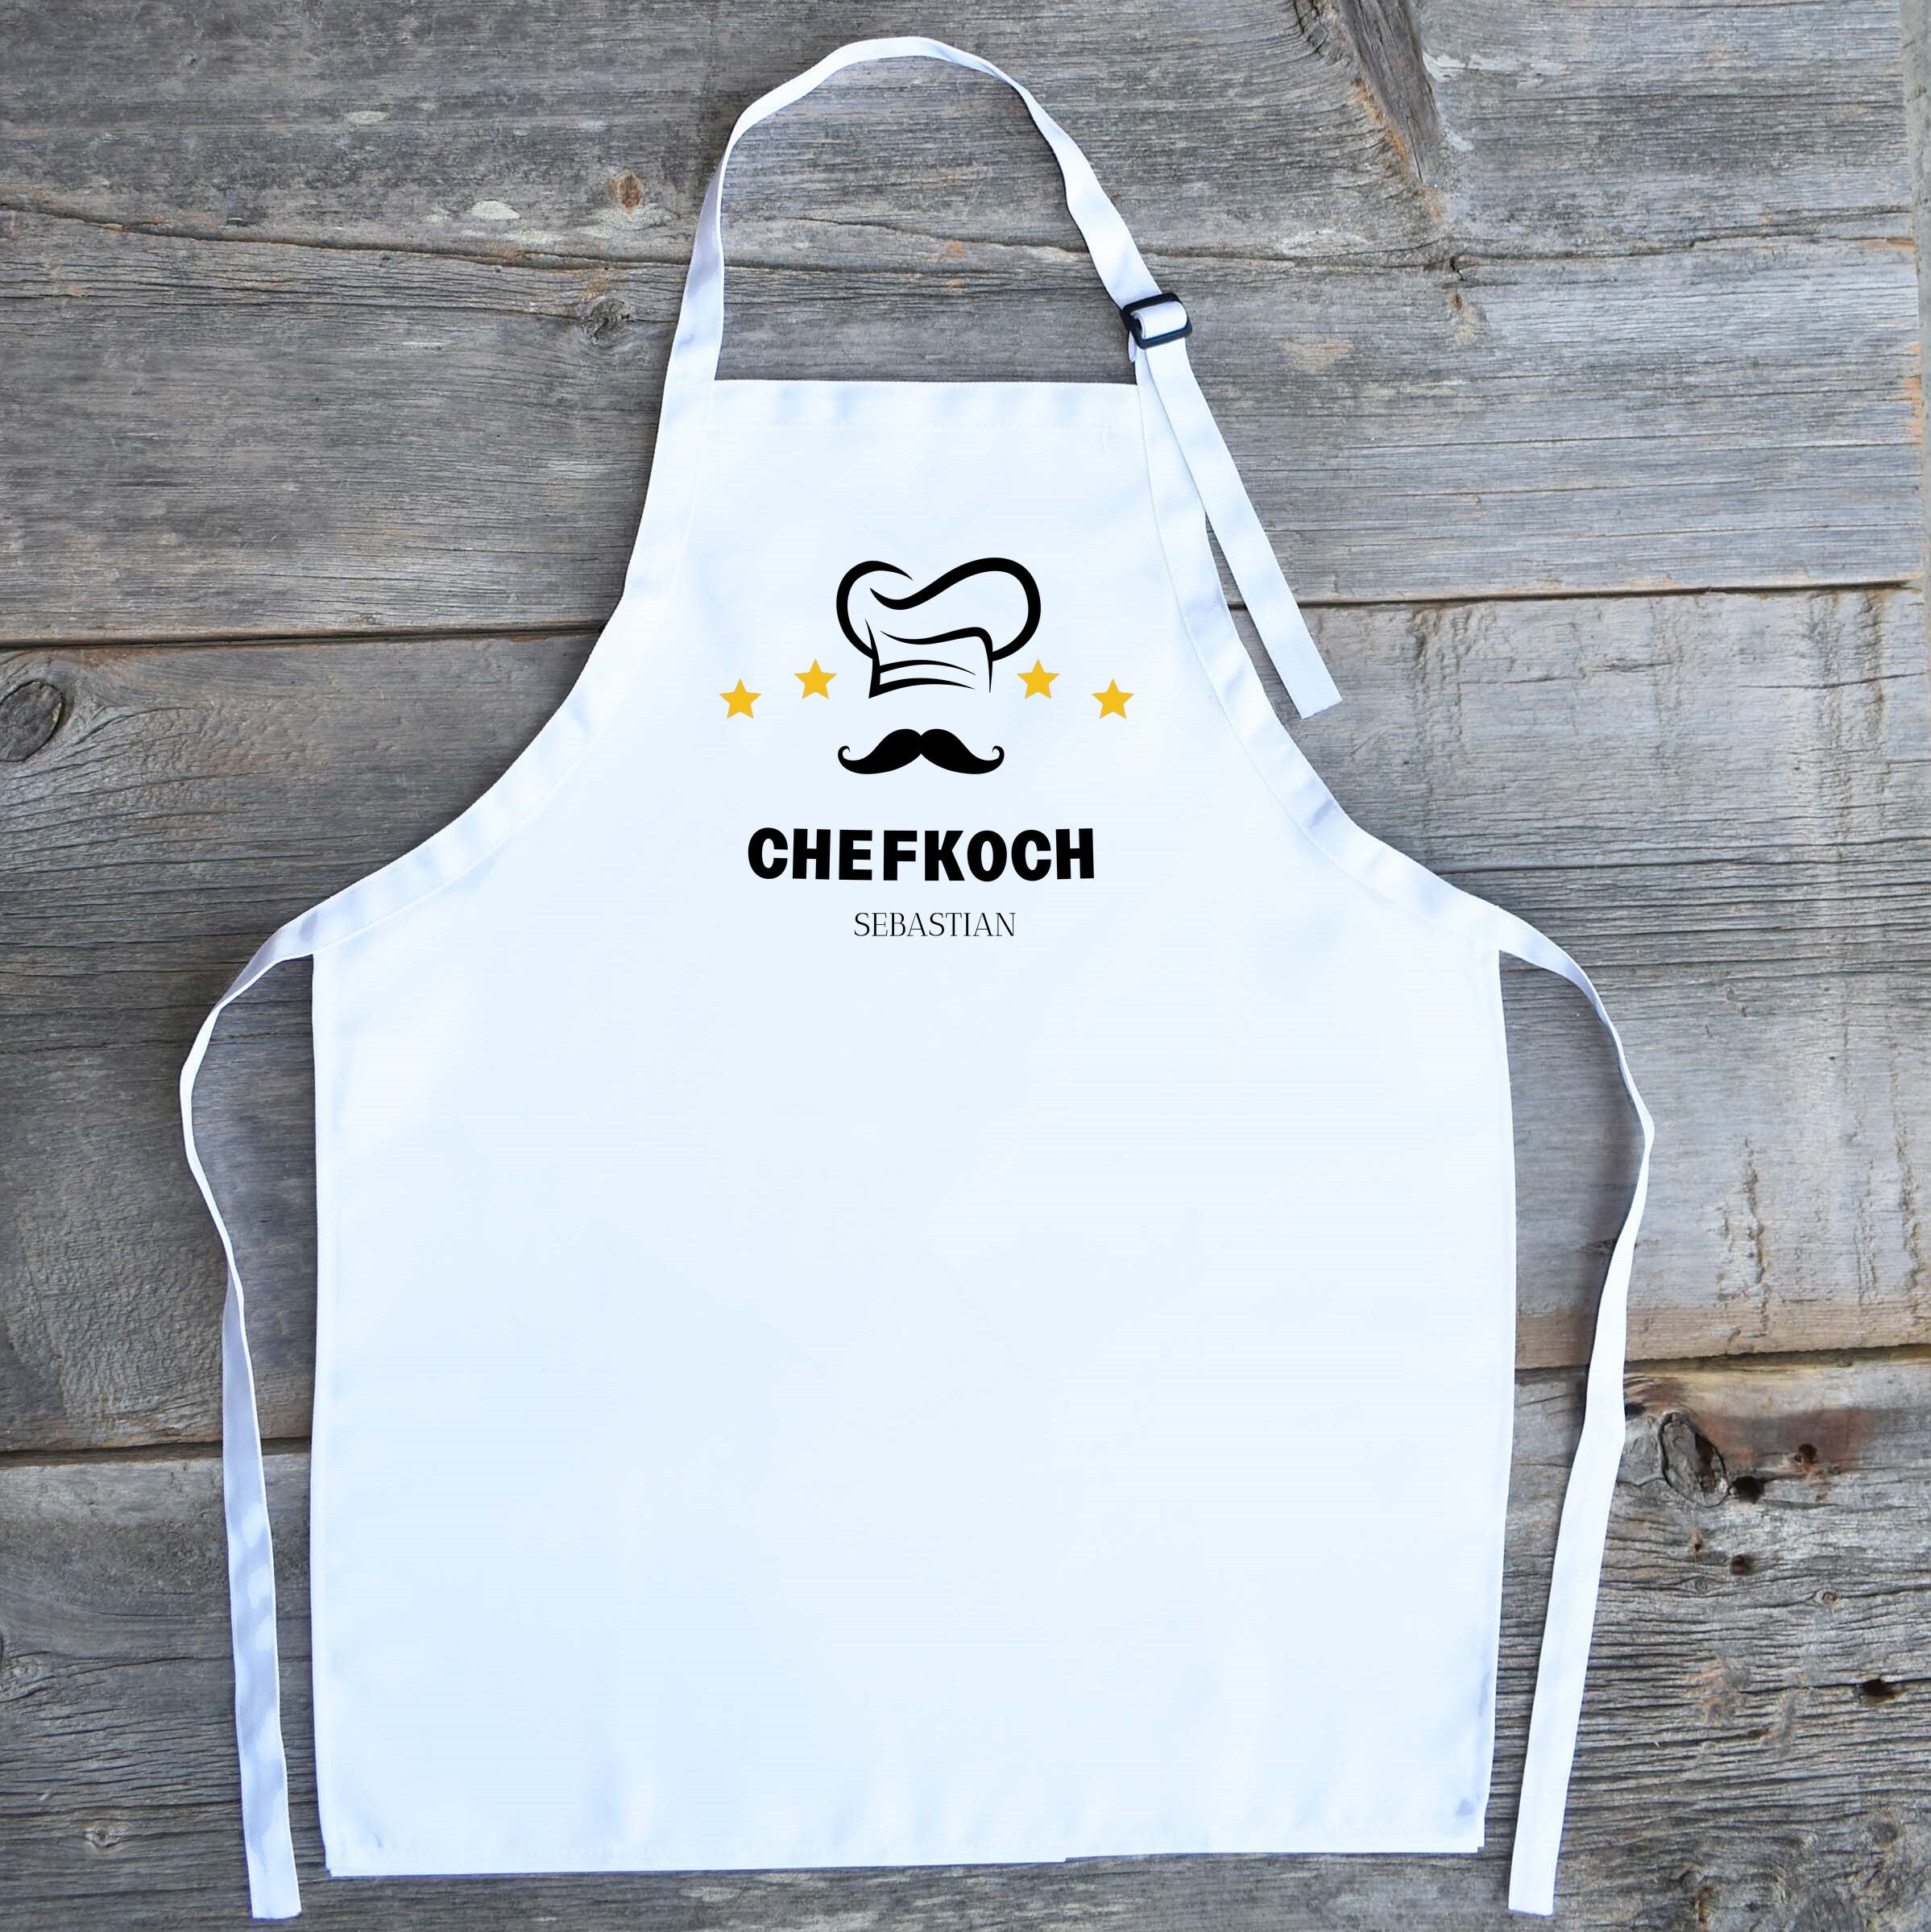 Kochschürze Mann| Grillschürze| Backschürze| Schürze| personalisiert mit Namen| Chefkoch - GlamourDesign